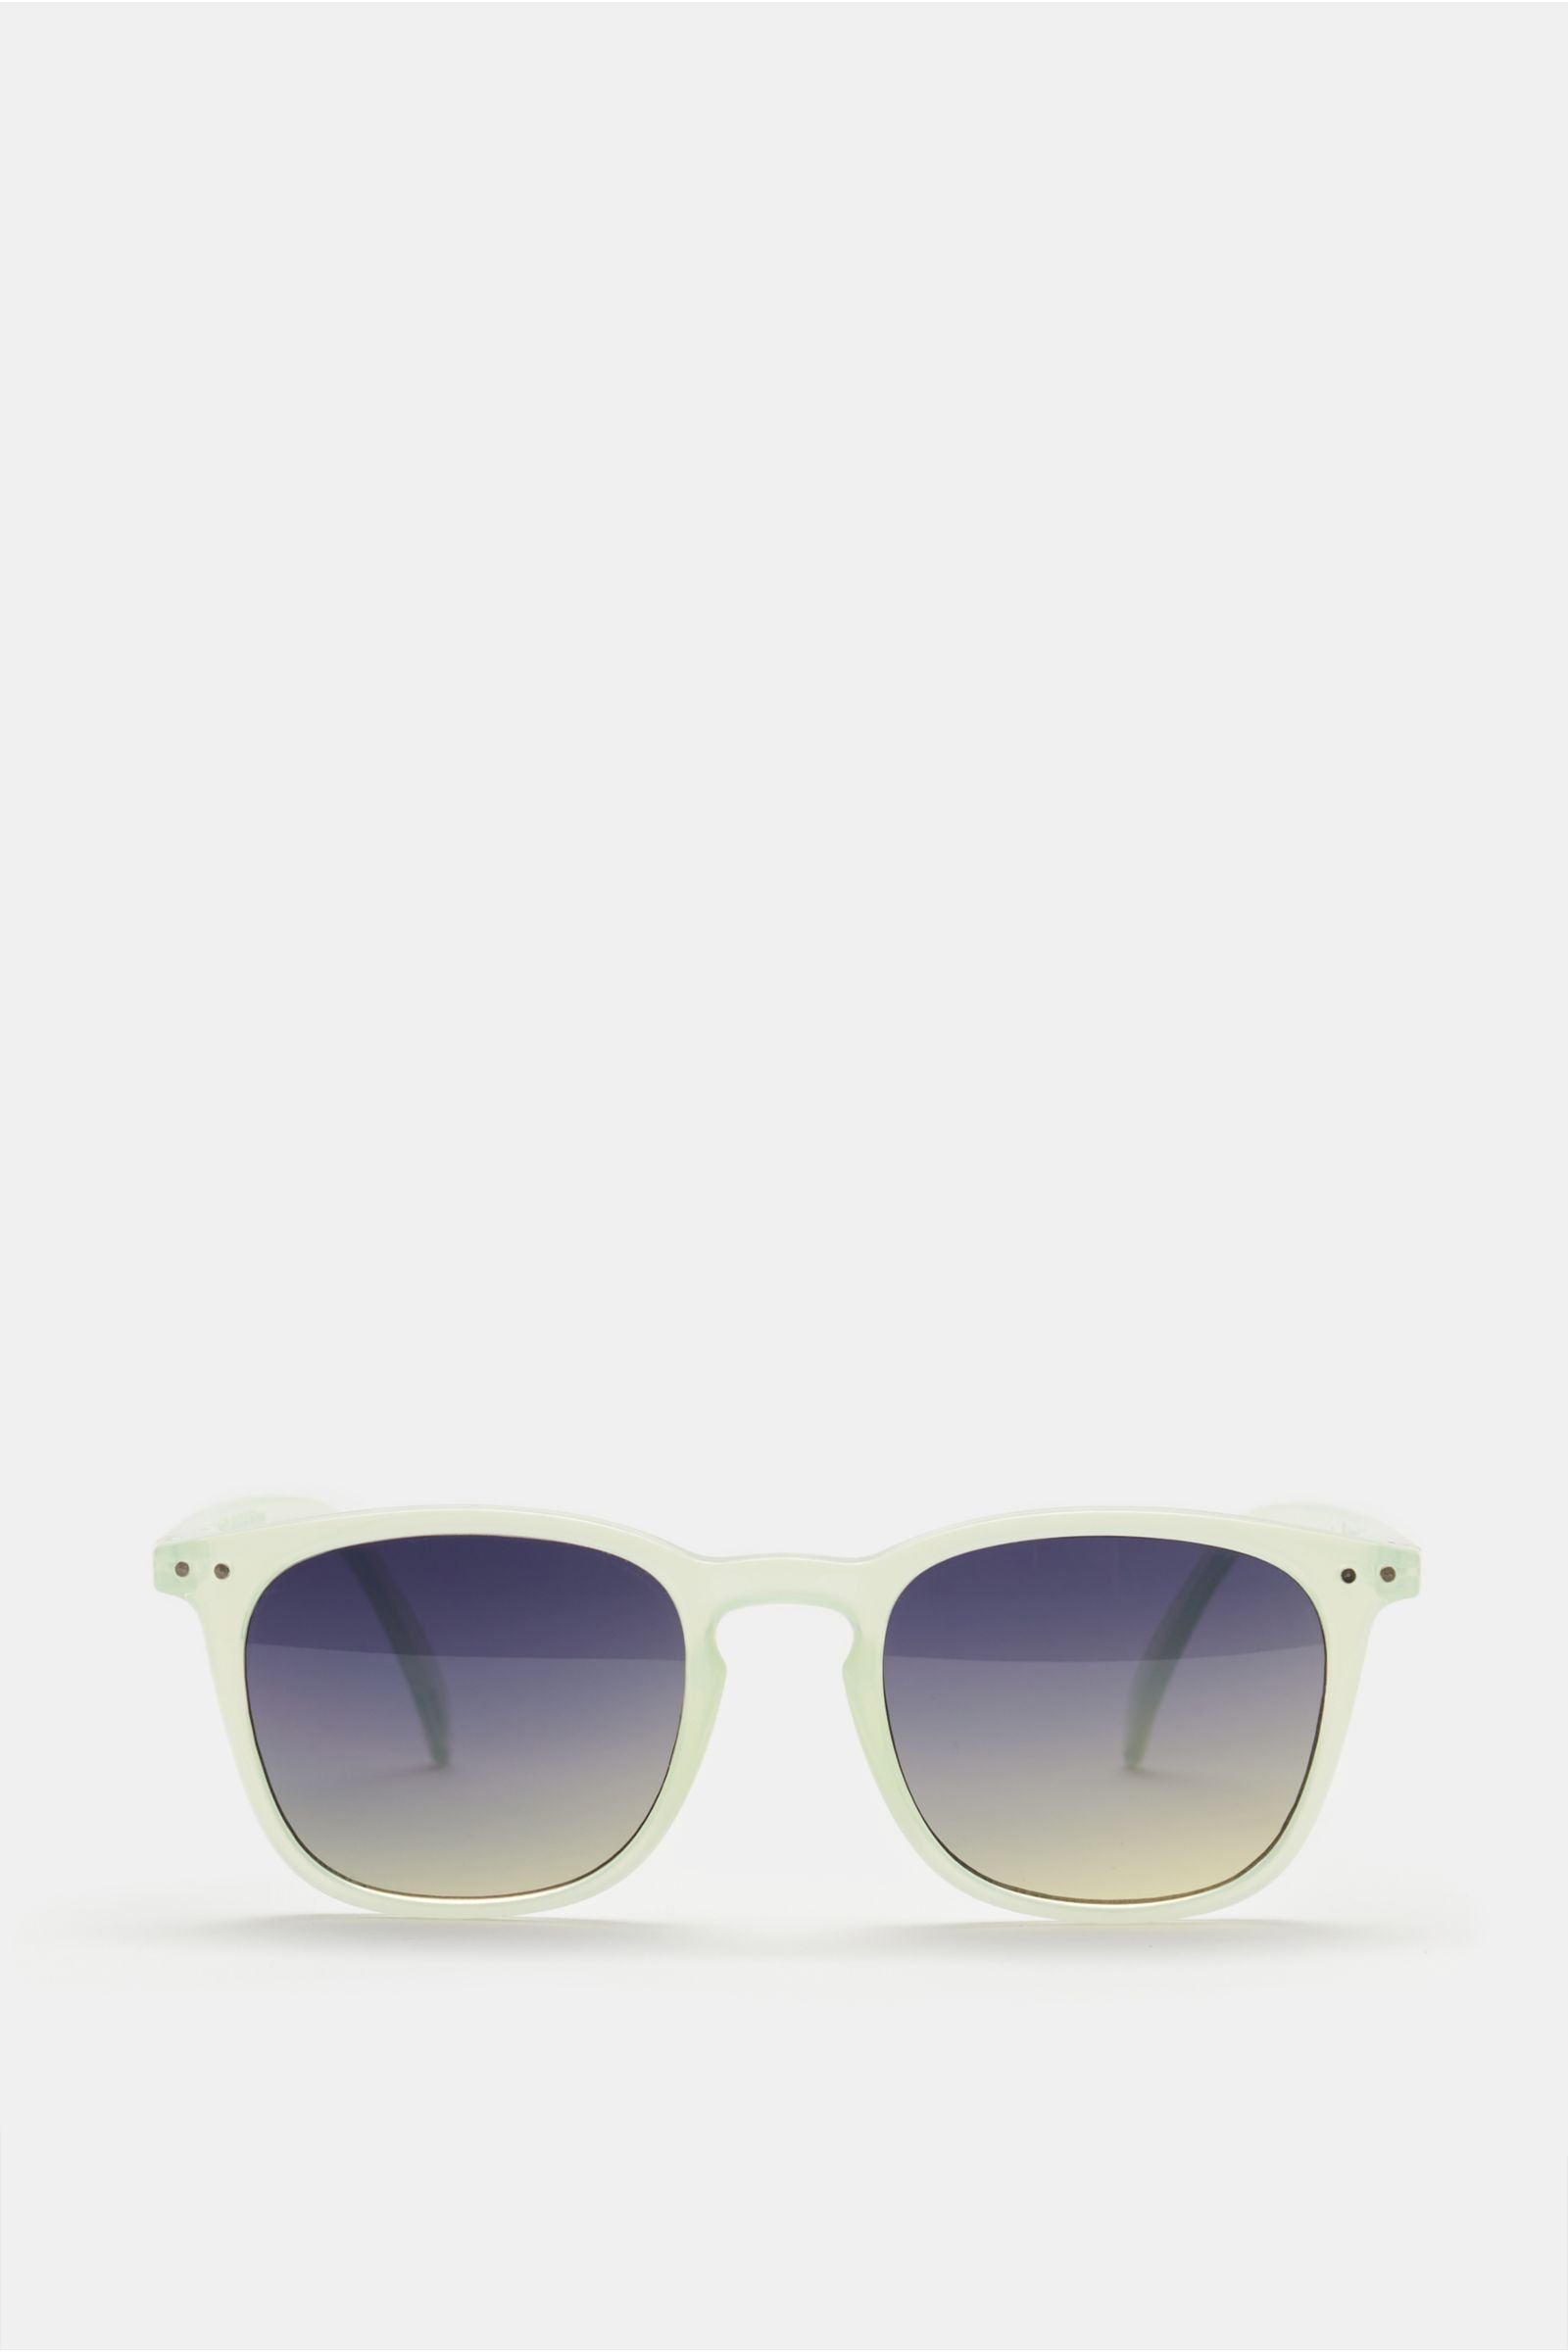 Sunglasses '#E Sun' light green/grey